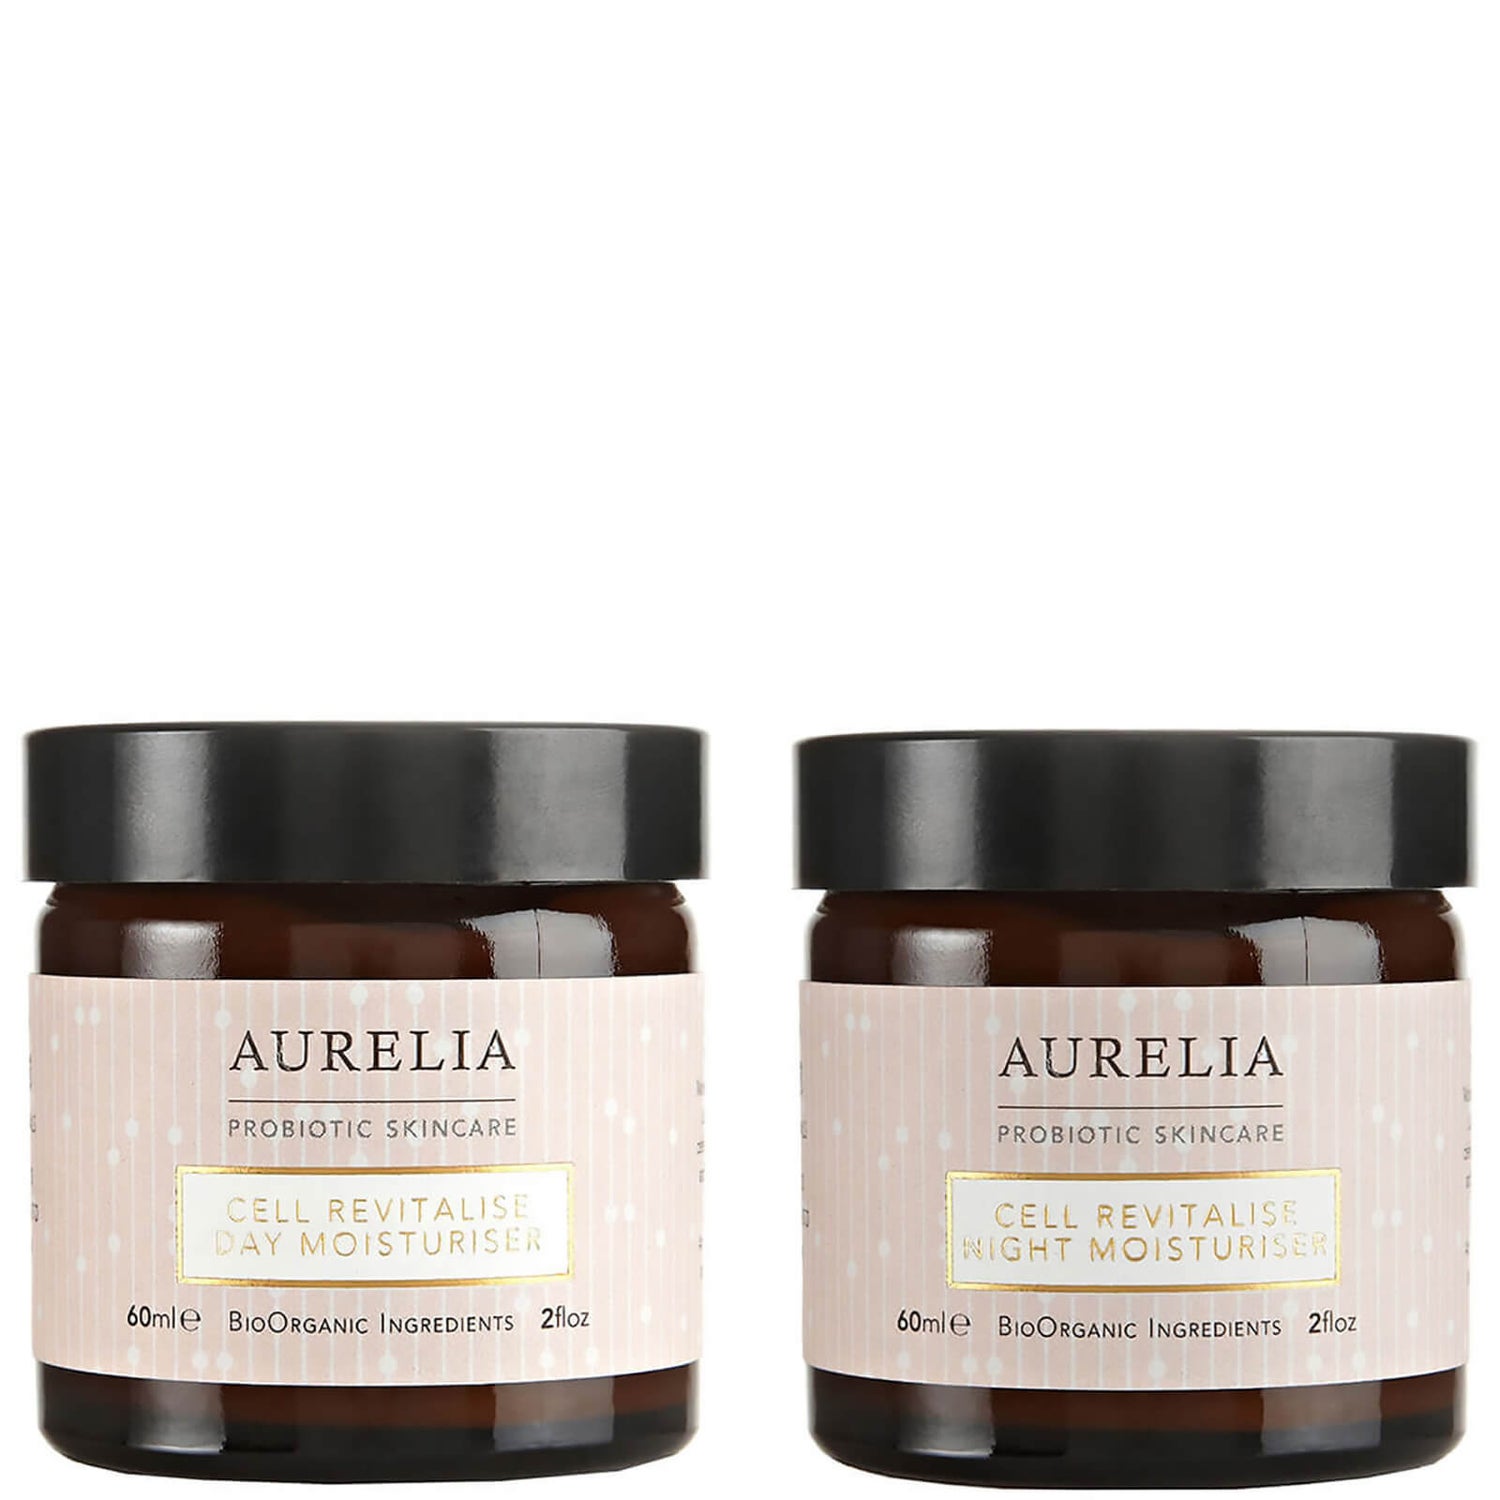 Aurelia Probiotic Skincare Cell Revitalise Day and Night Moisturiser